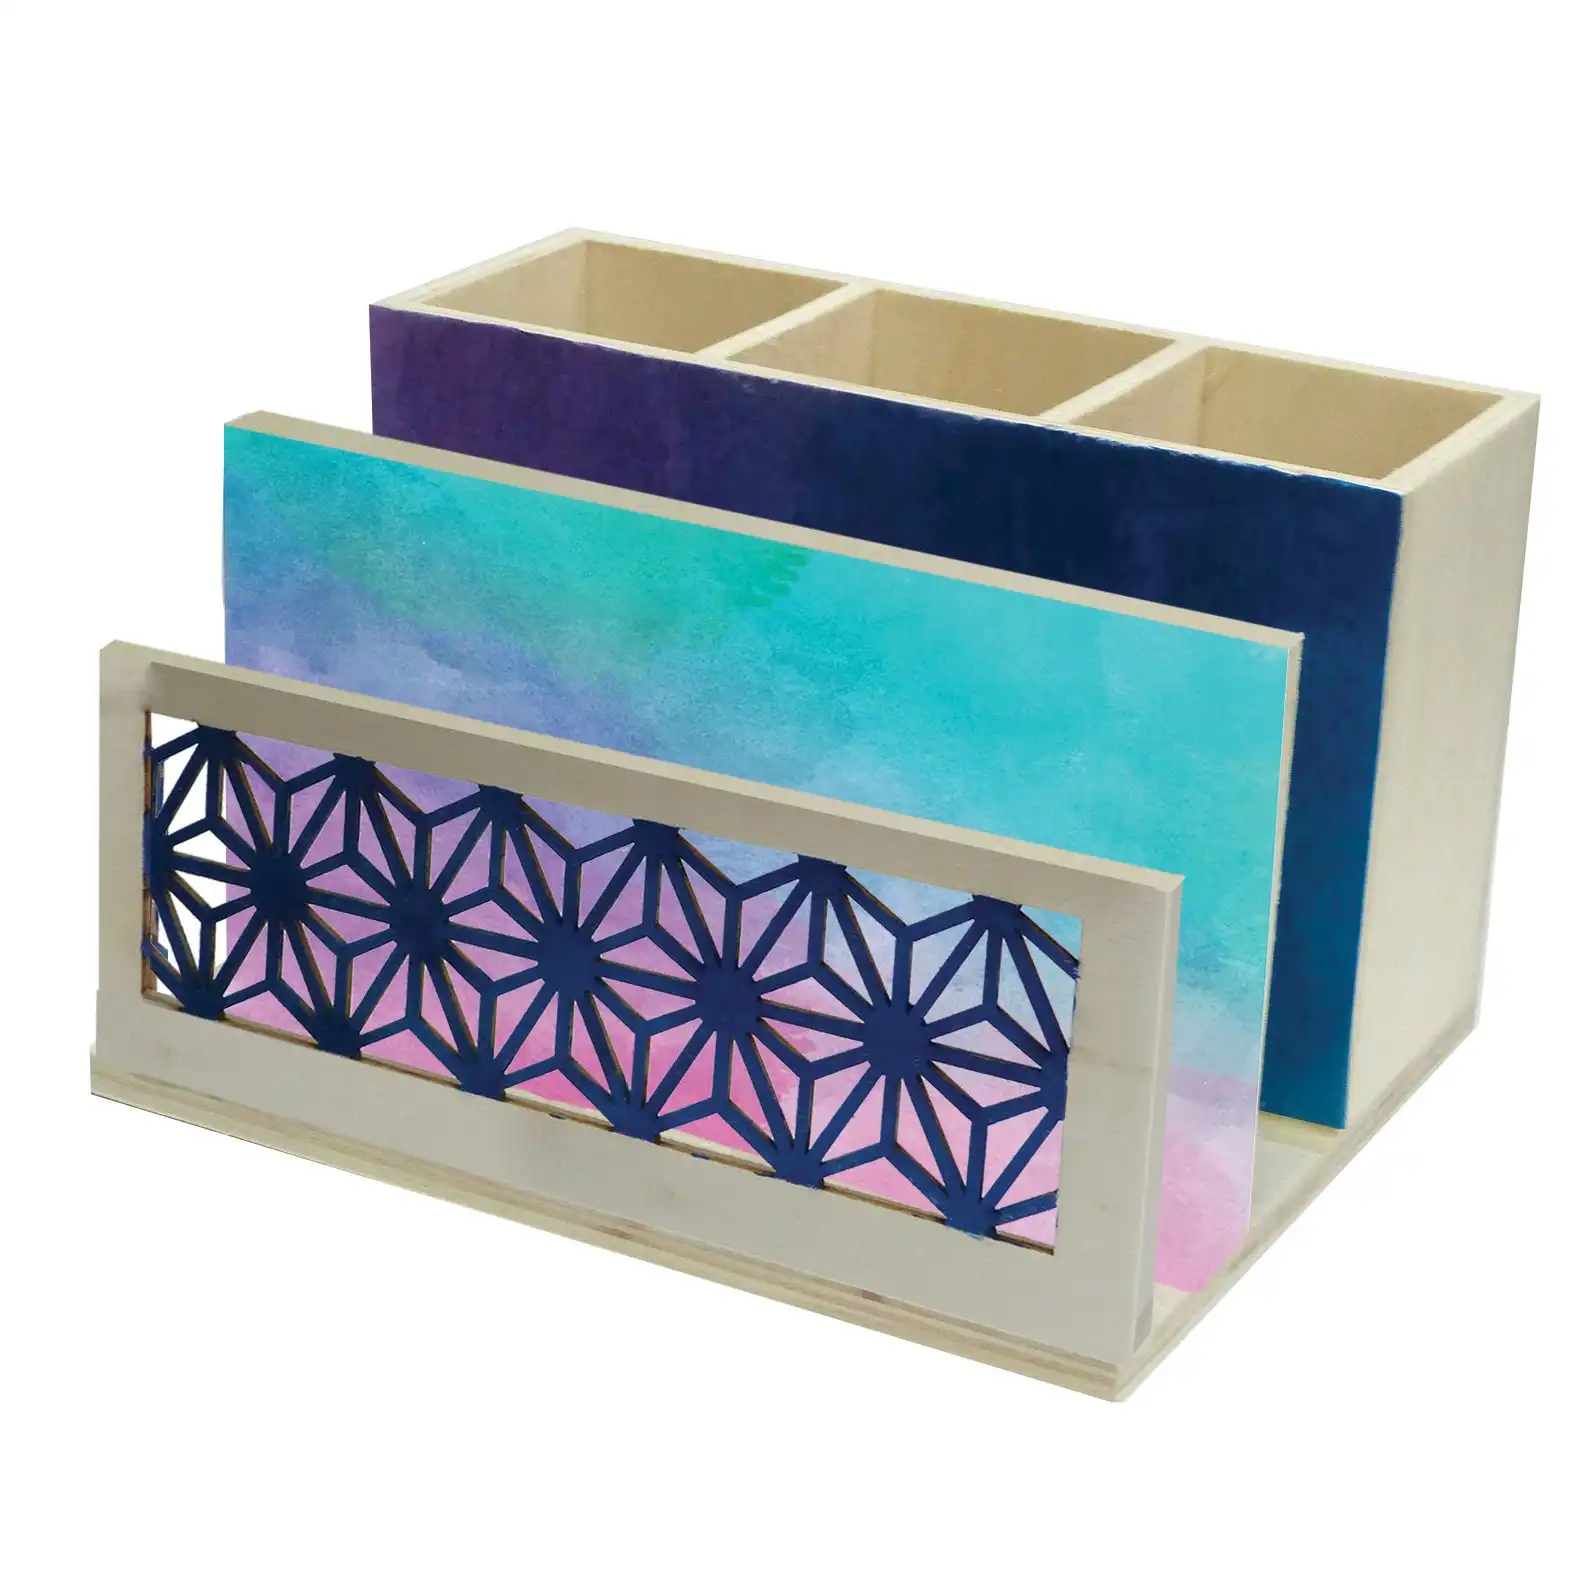 Boyle Art/Craft 18.5x15.3cm Laser Cut Plywood Desk Organiser Storage/Holder